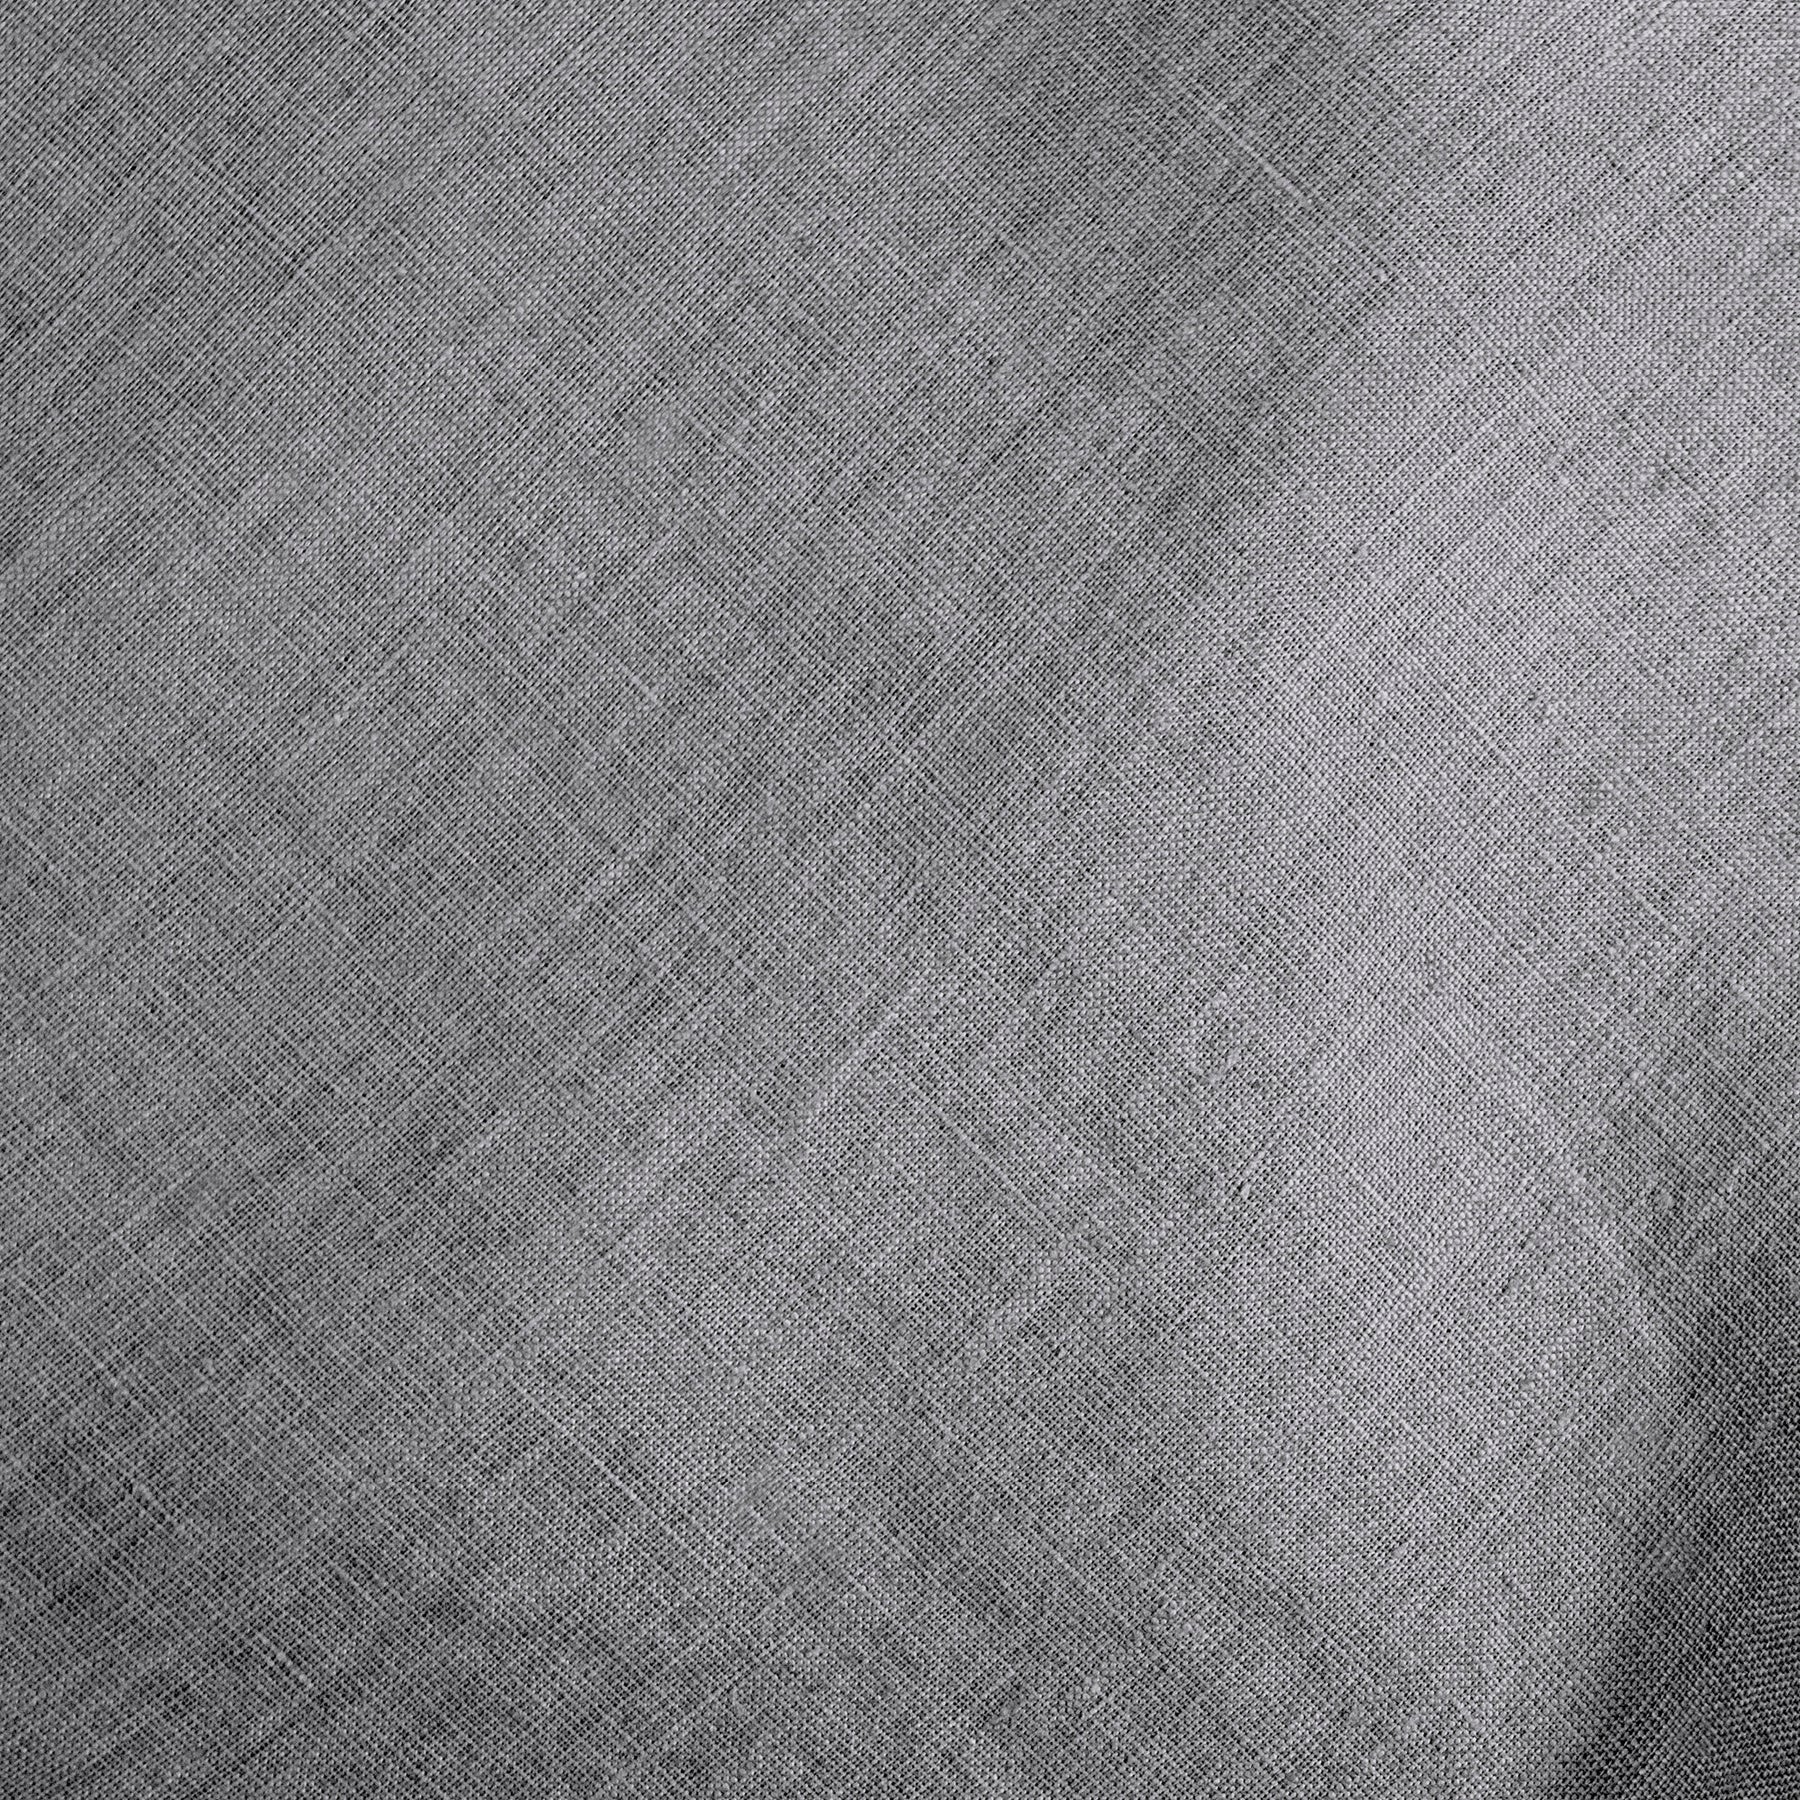 Close-up image of Stone Gray Relaxed Hemp